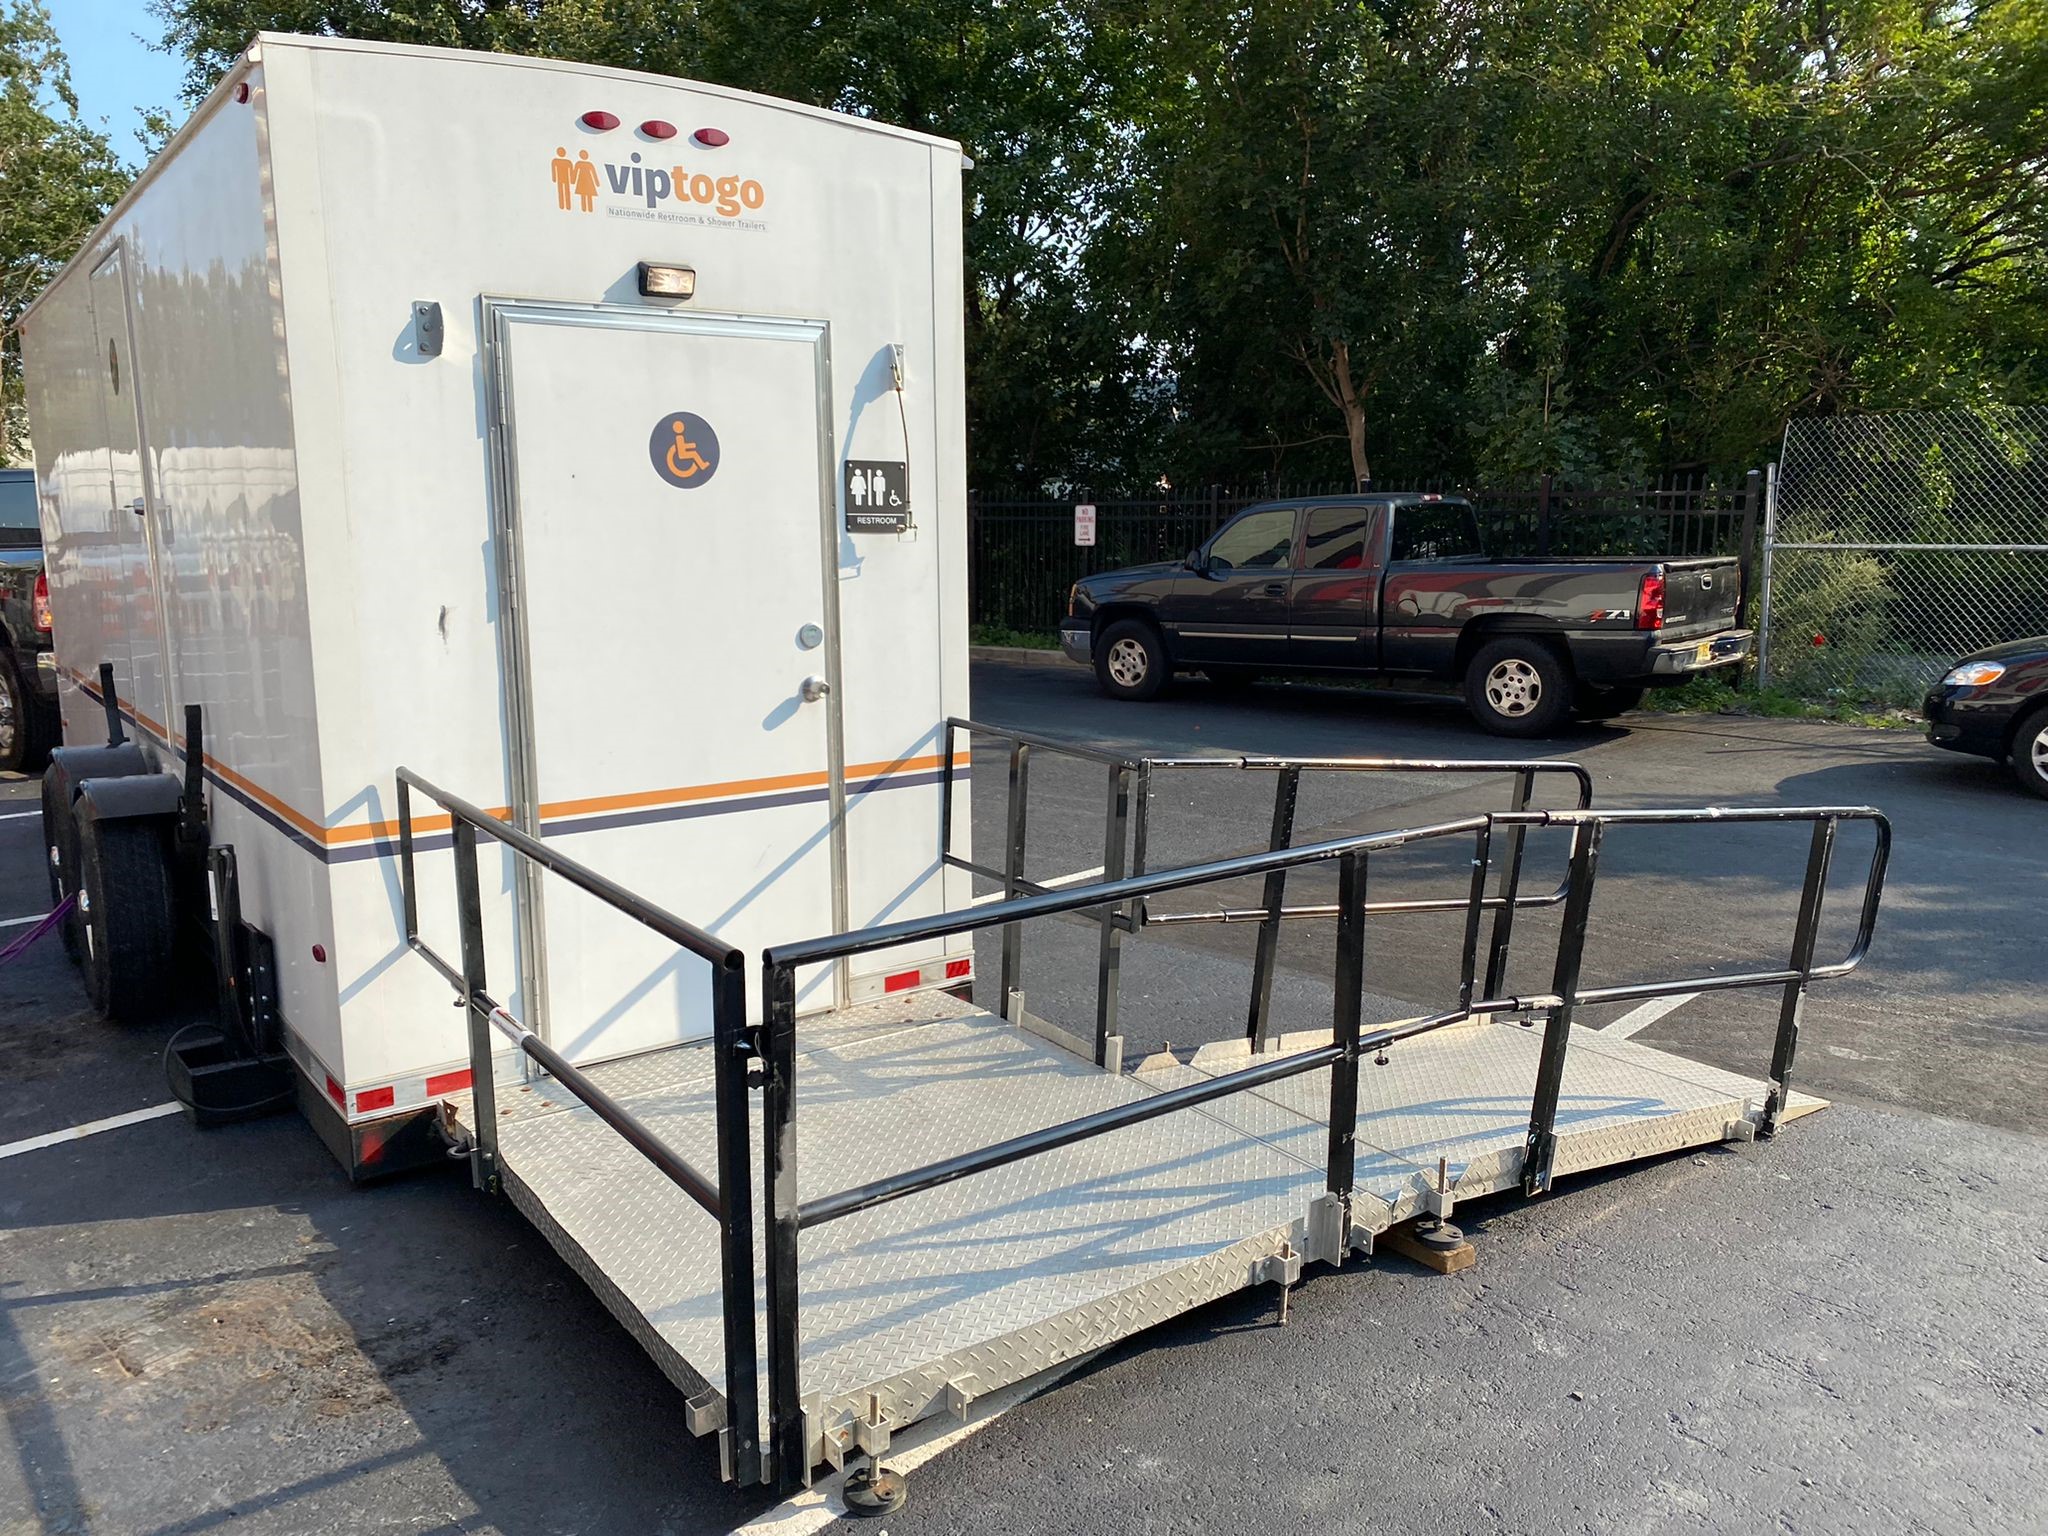 portable restroom trailer with handicap access